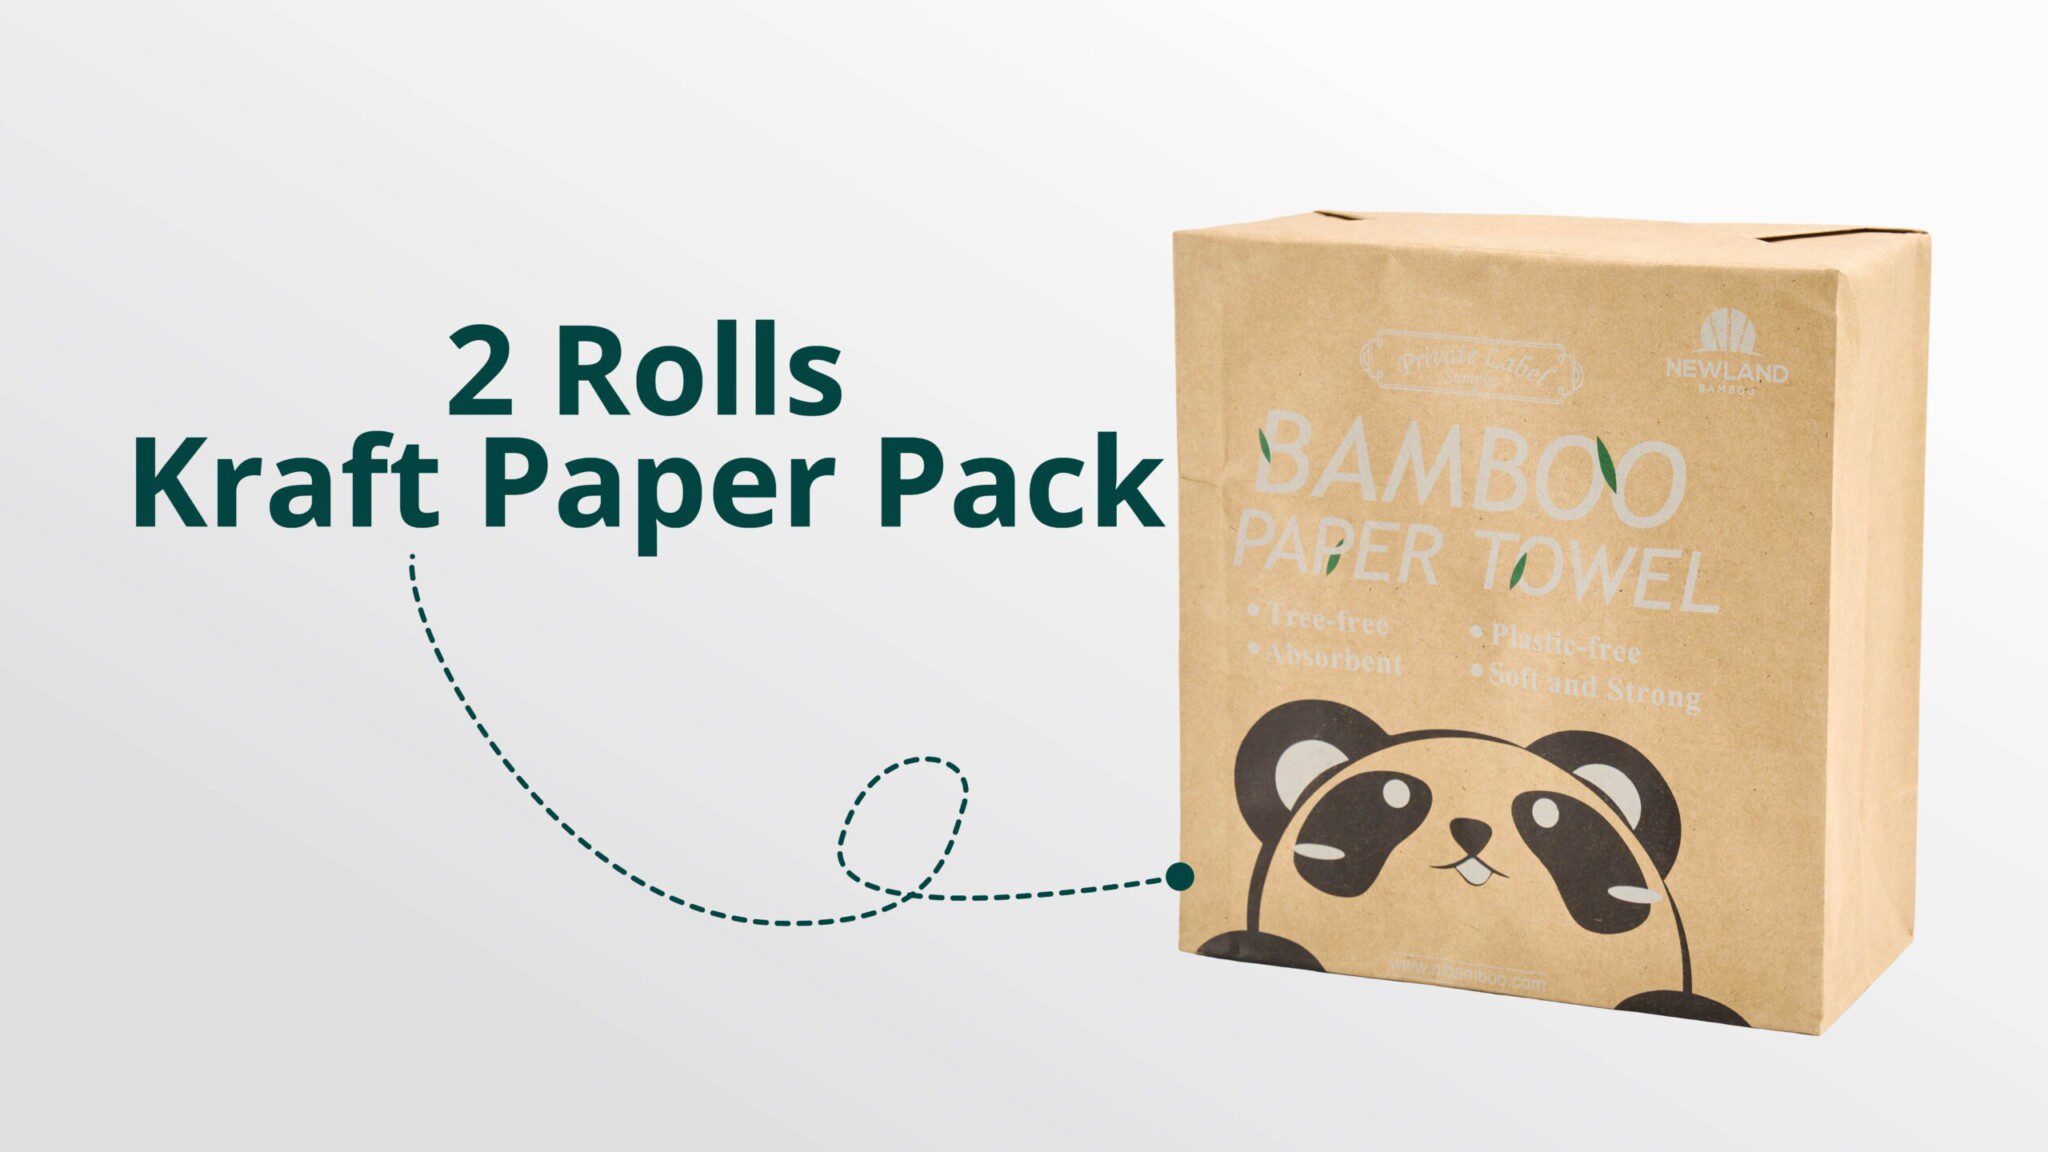 2 rolls kraft paper pack kitchen paper towels